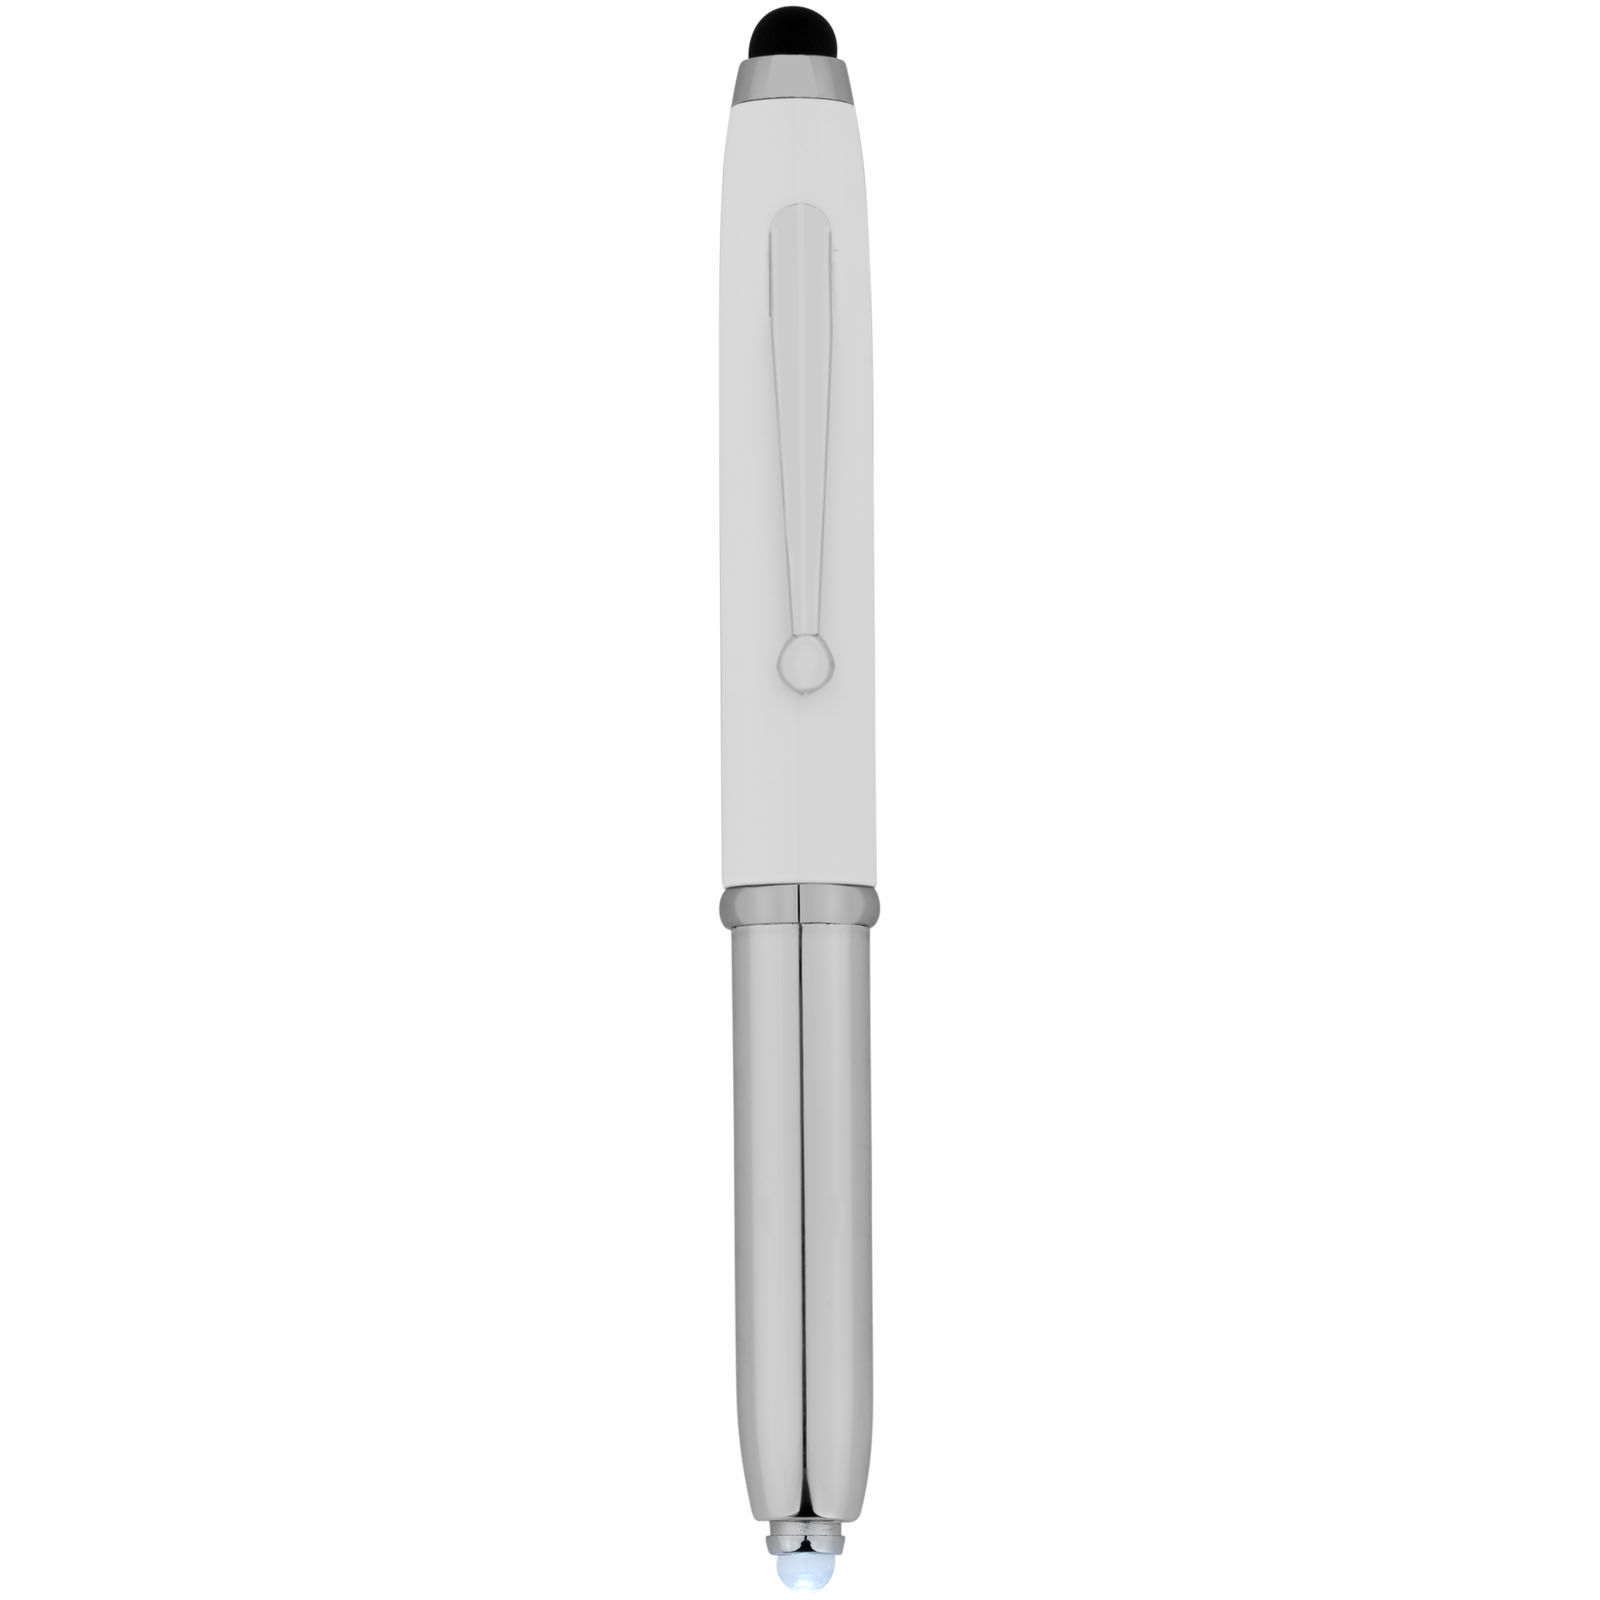 Ballpoint Pens - Xenon stylus ballpoint pen with LED light